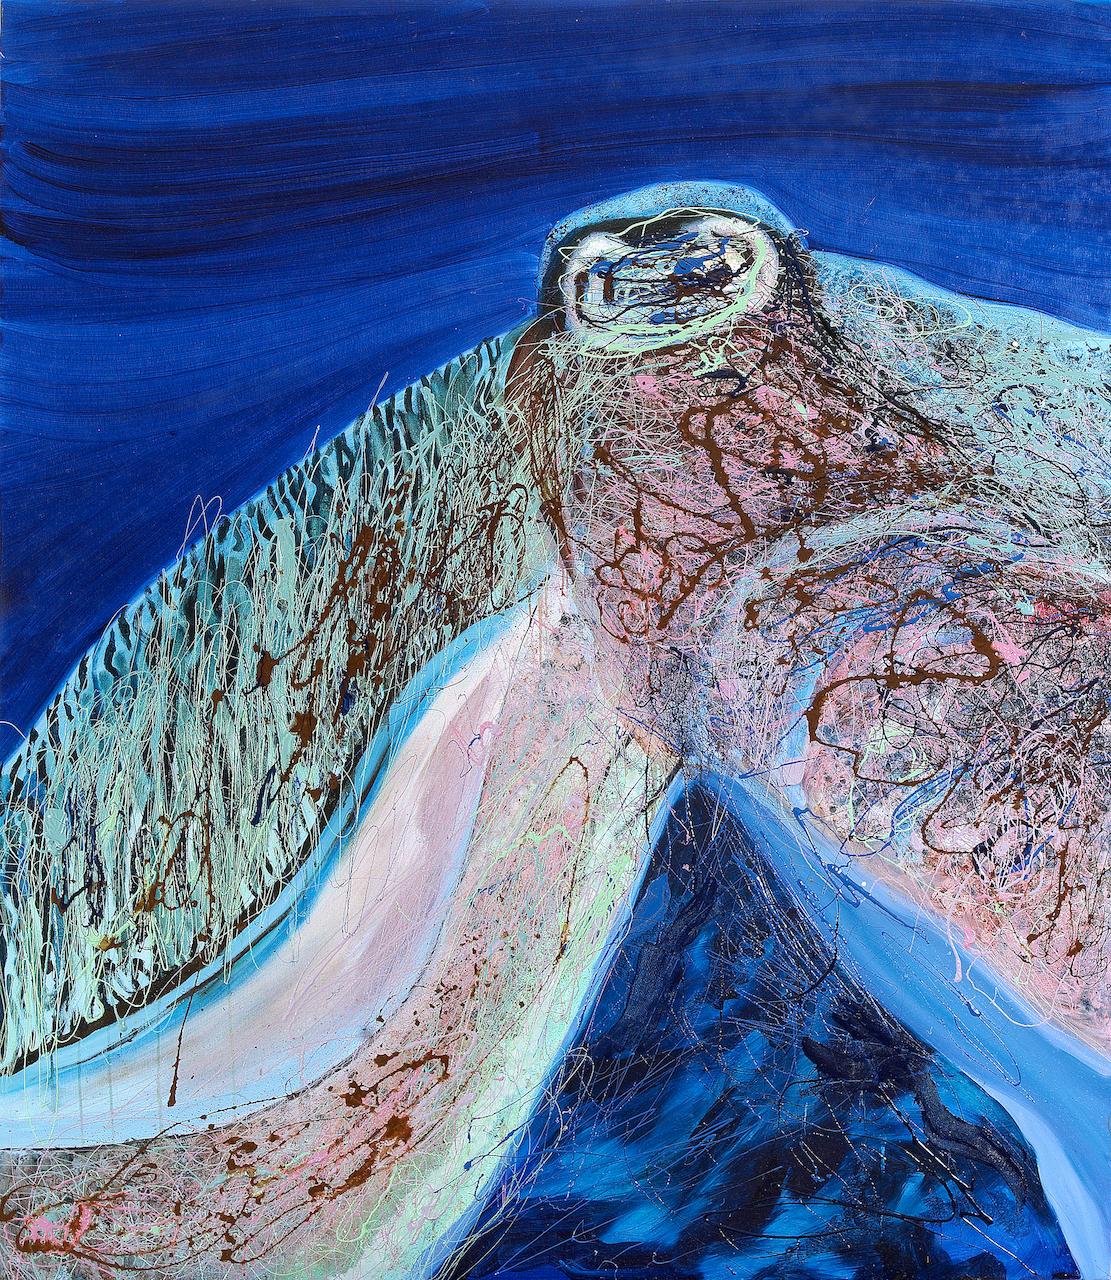 Griechische zeitgenössische Kunst von Peny Manavi – Unter dem Meer, 5